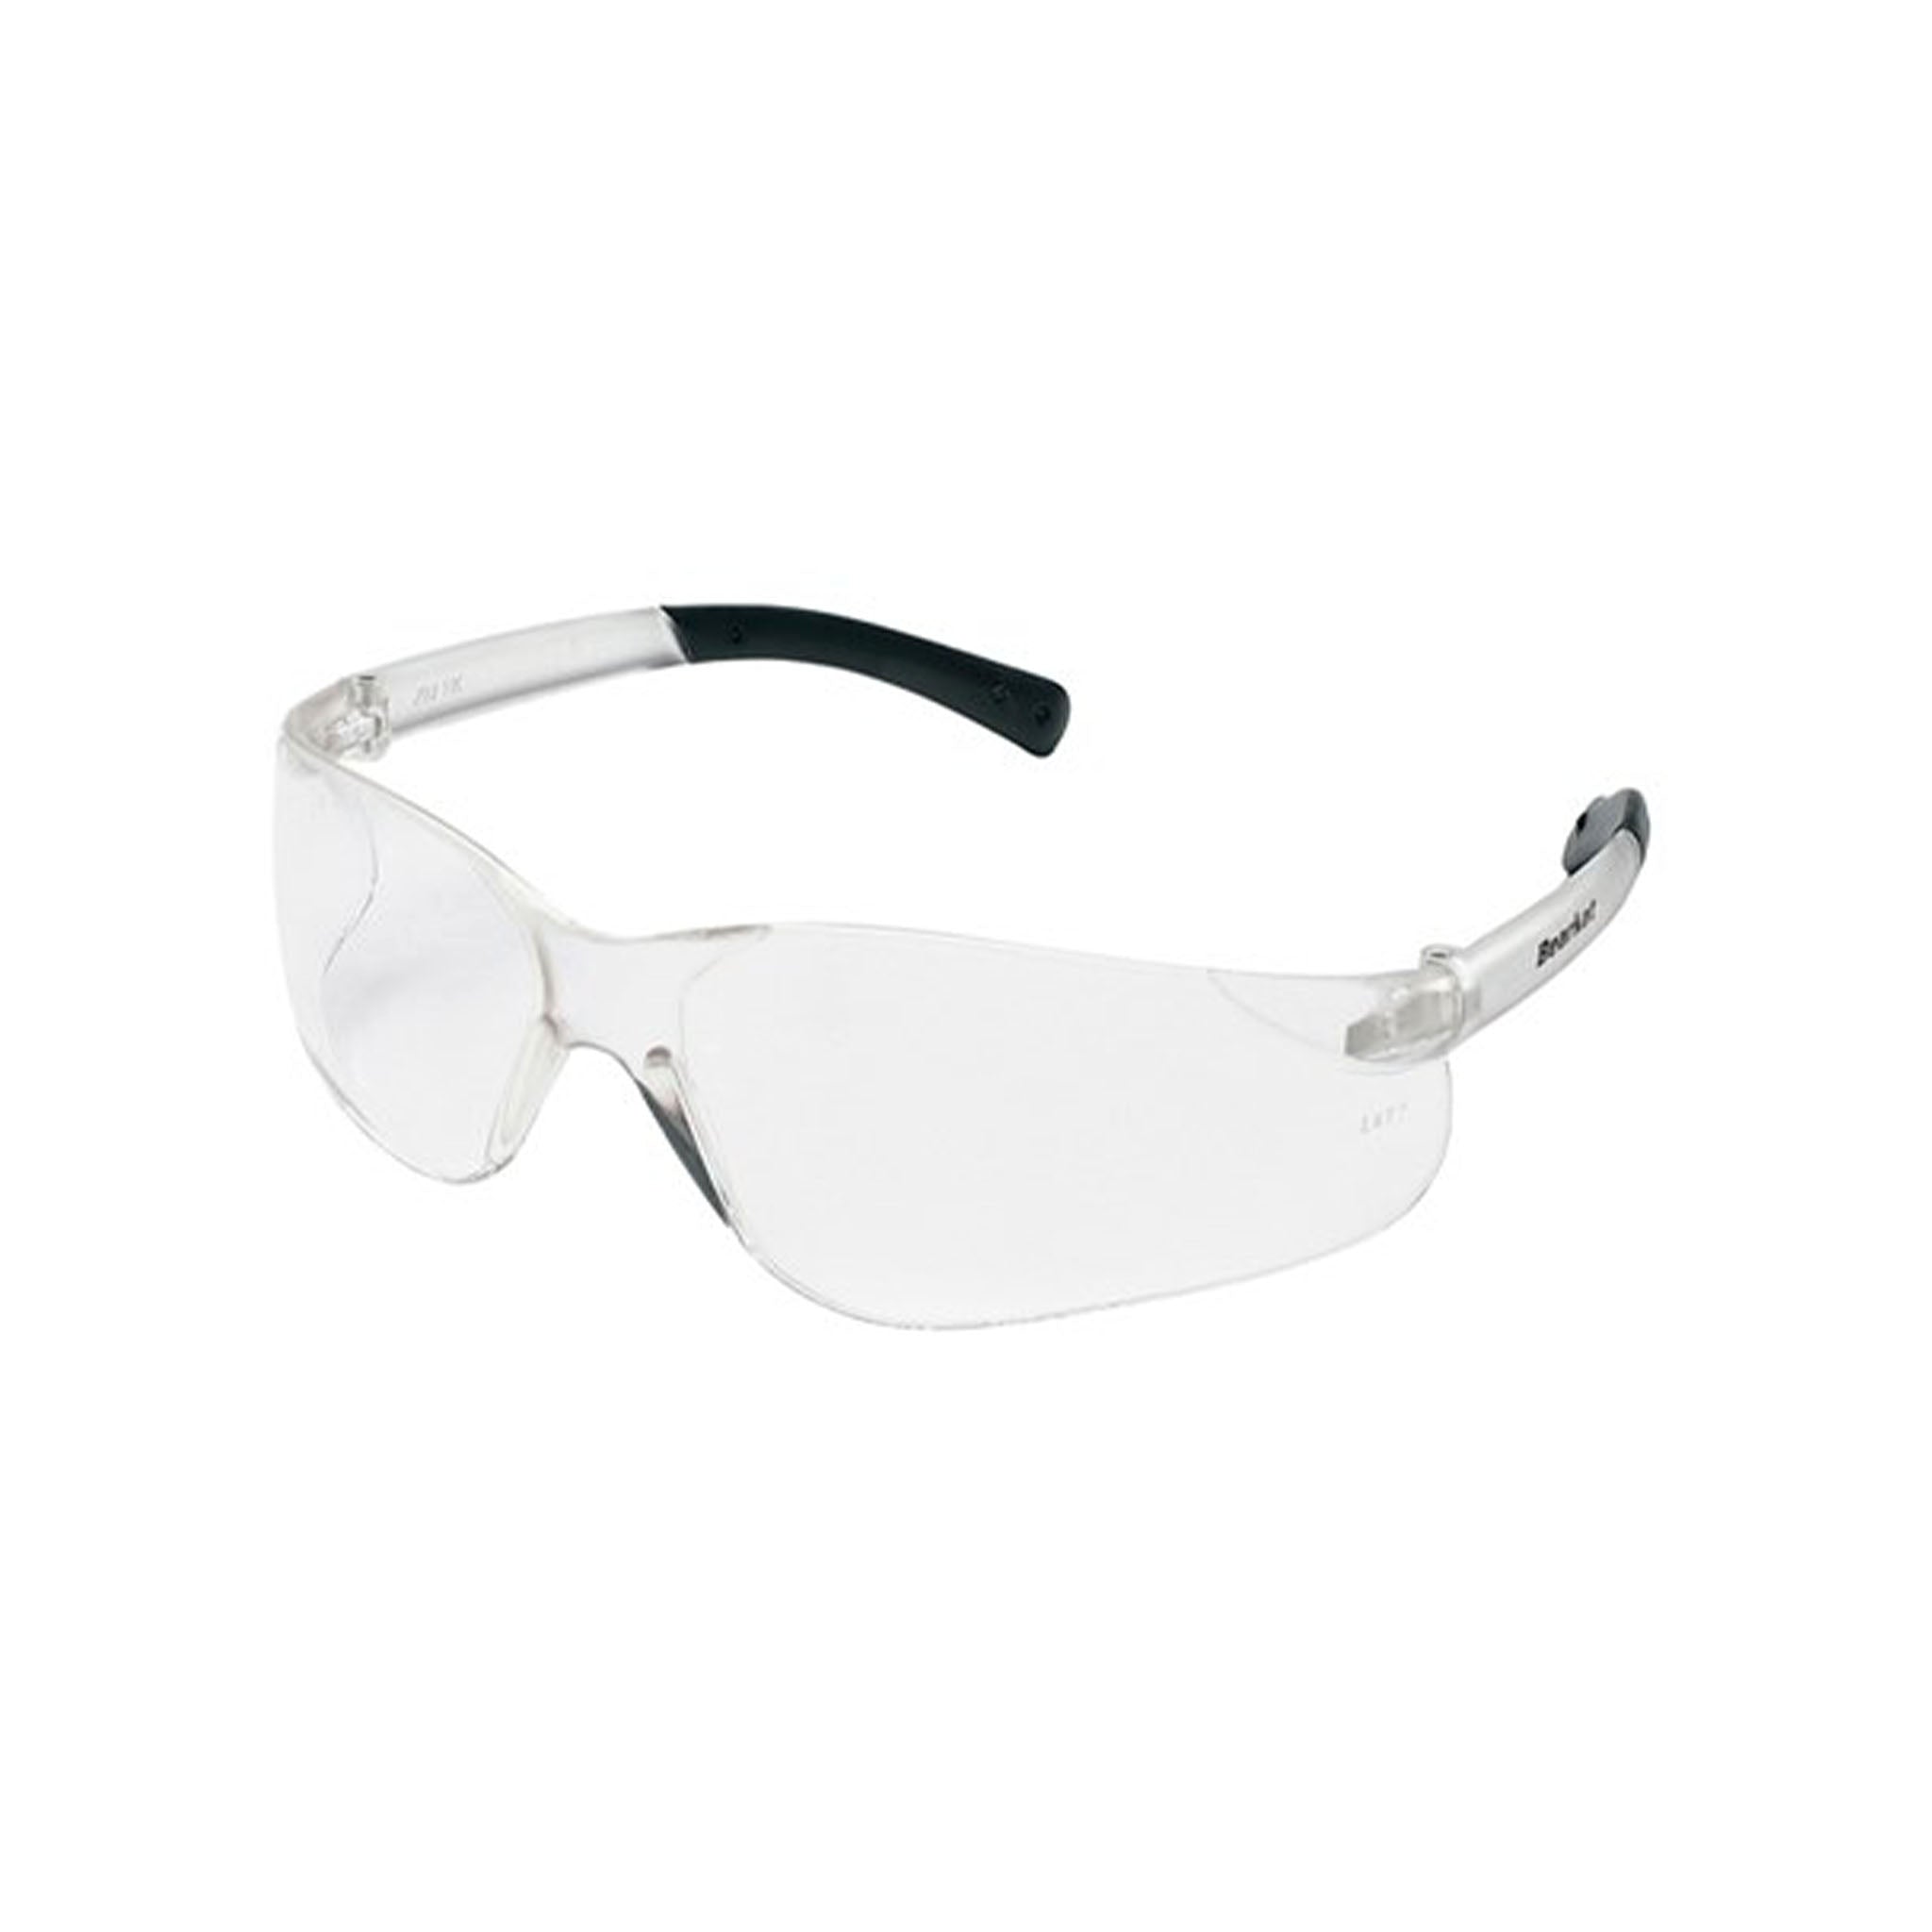 Slicks Safety Glasses, Clear Frame, Clear Lens, Anti-Fog